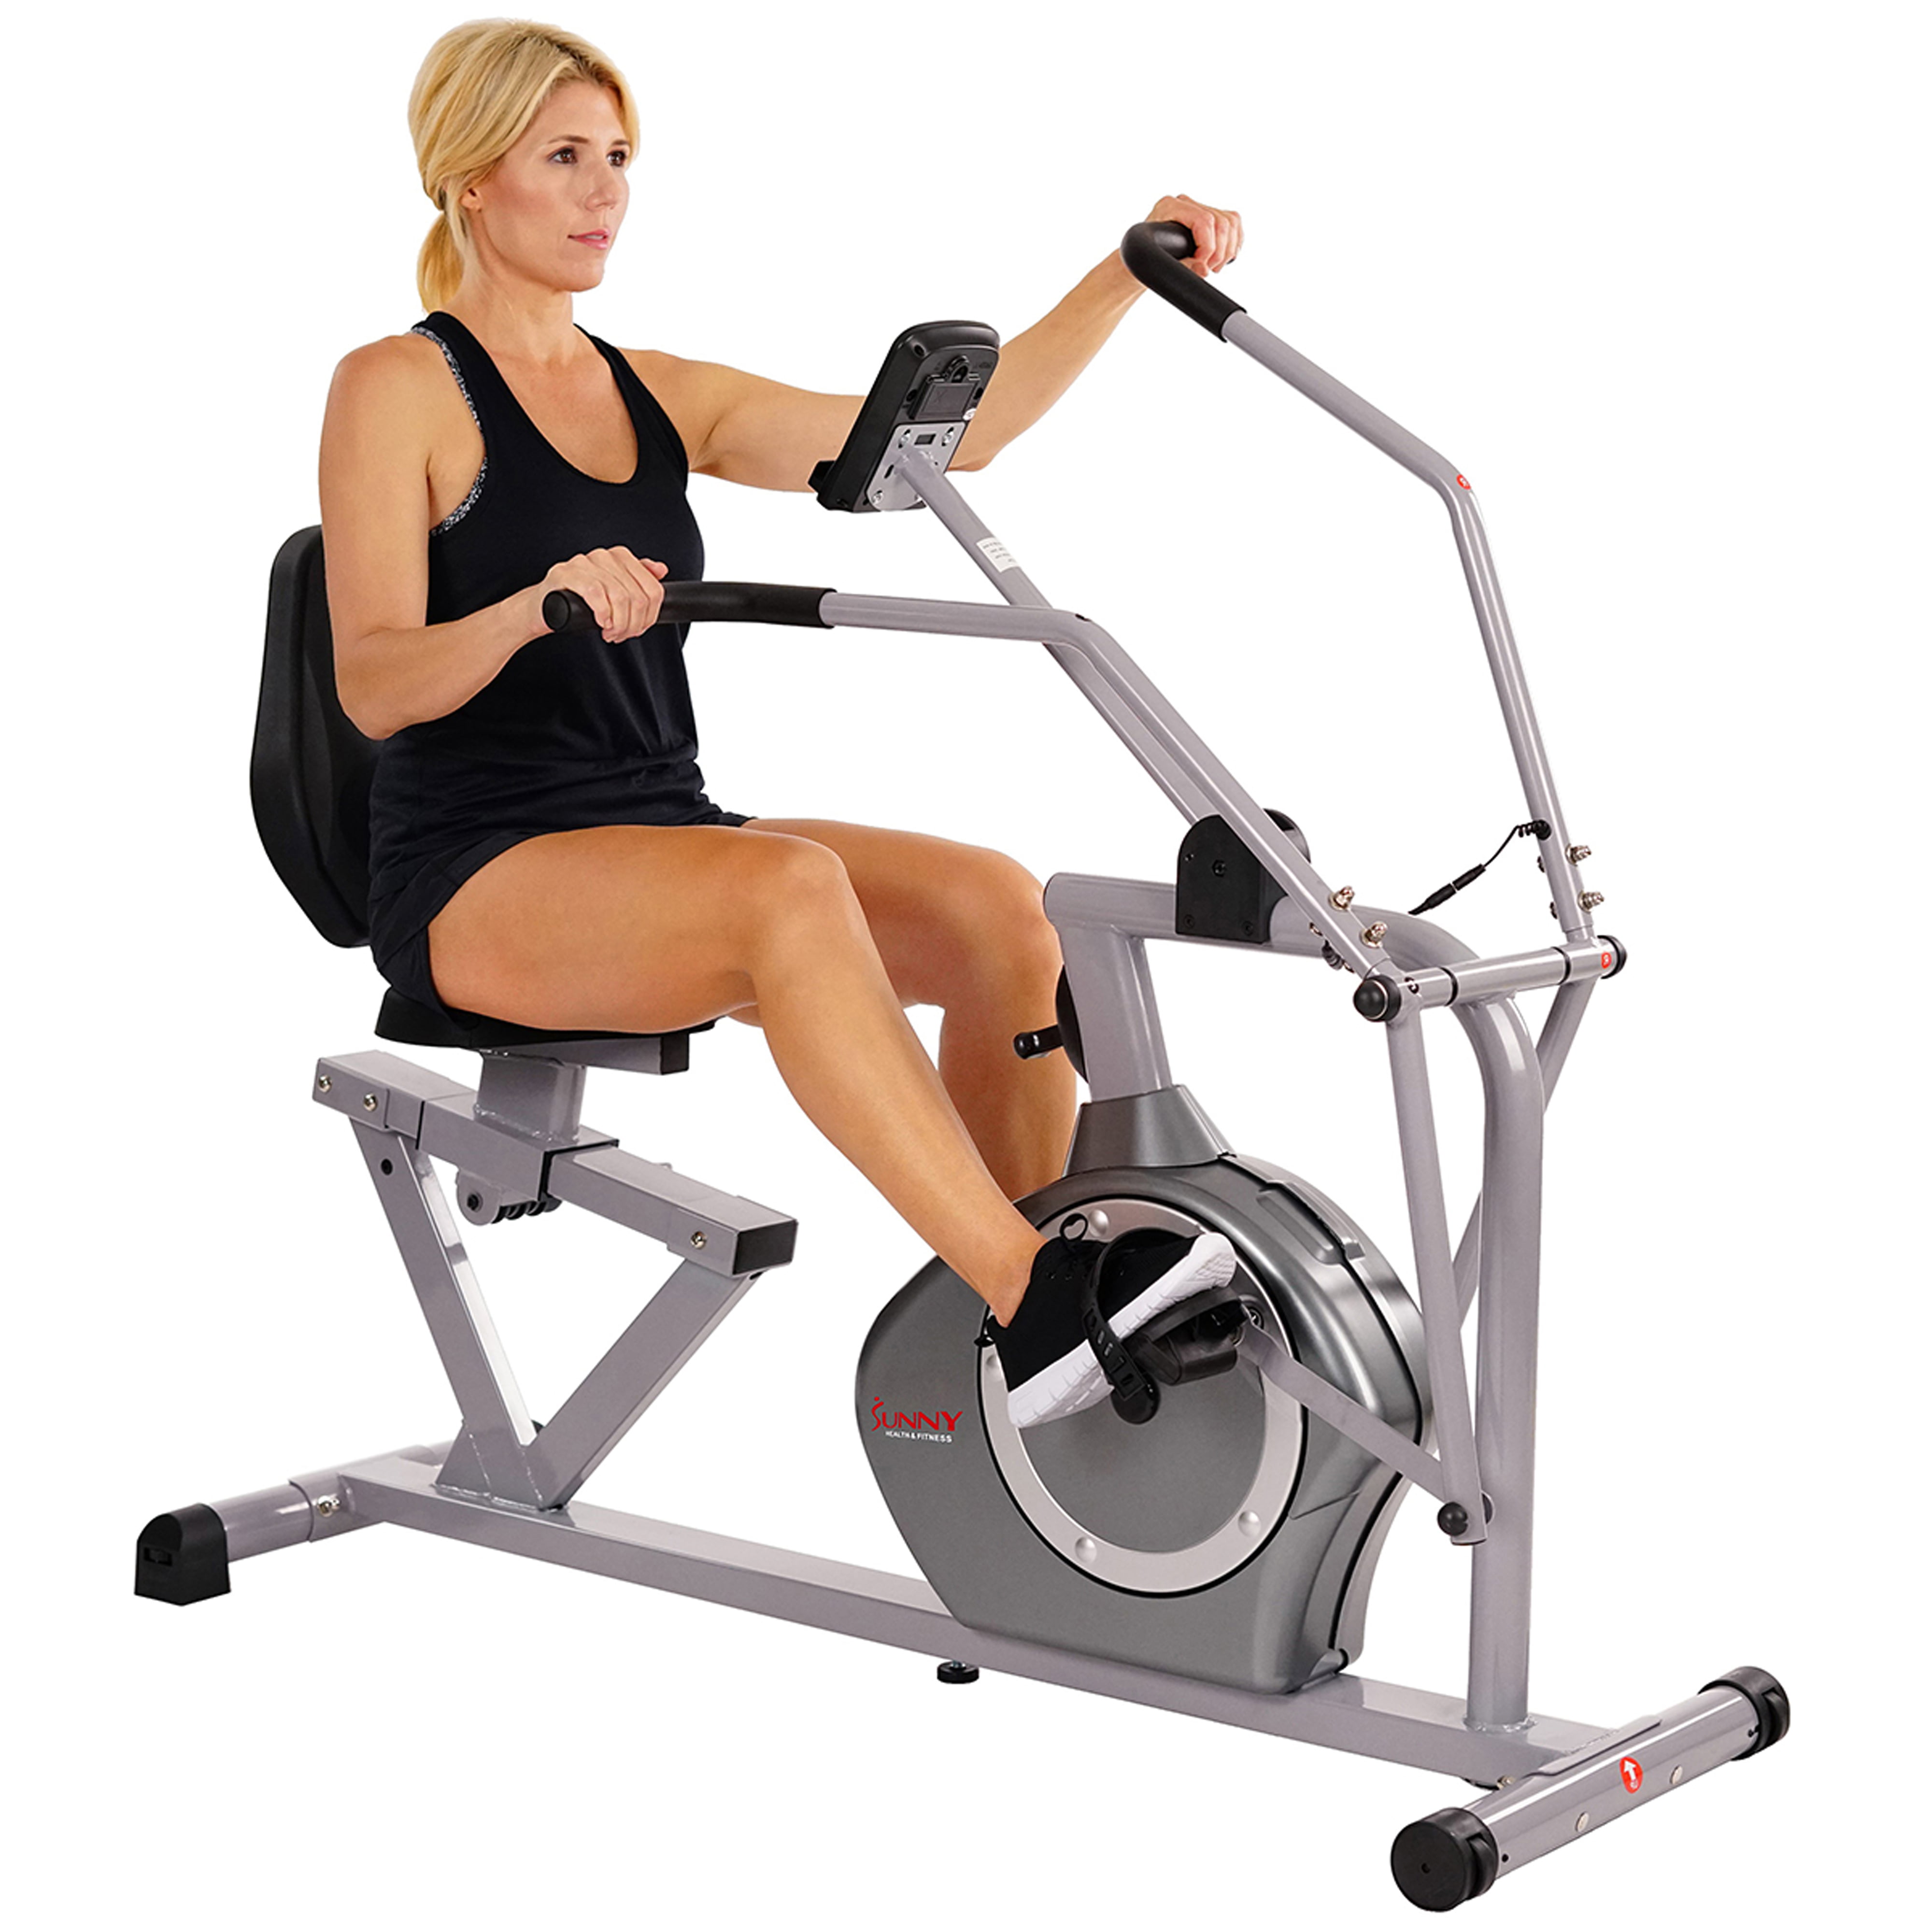 Sunny Health & Fitness Magnetic Recumbent Bike Exercise Bike, 350 Lb